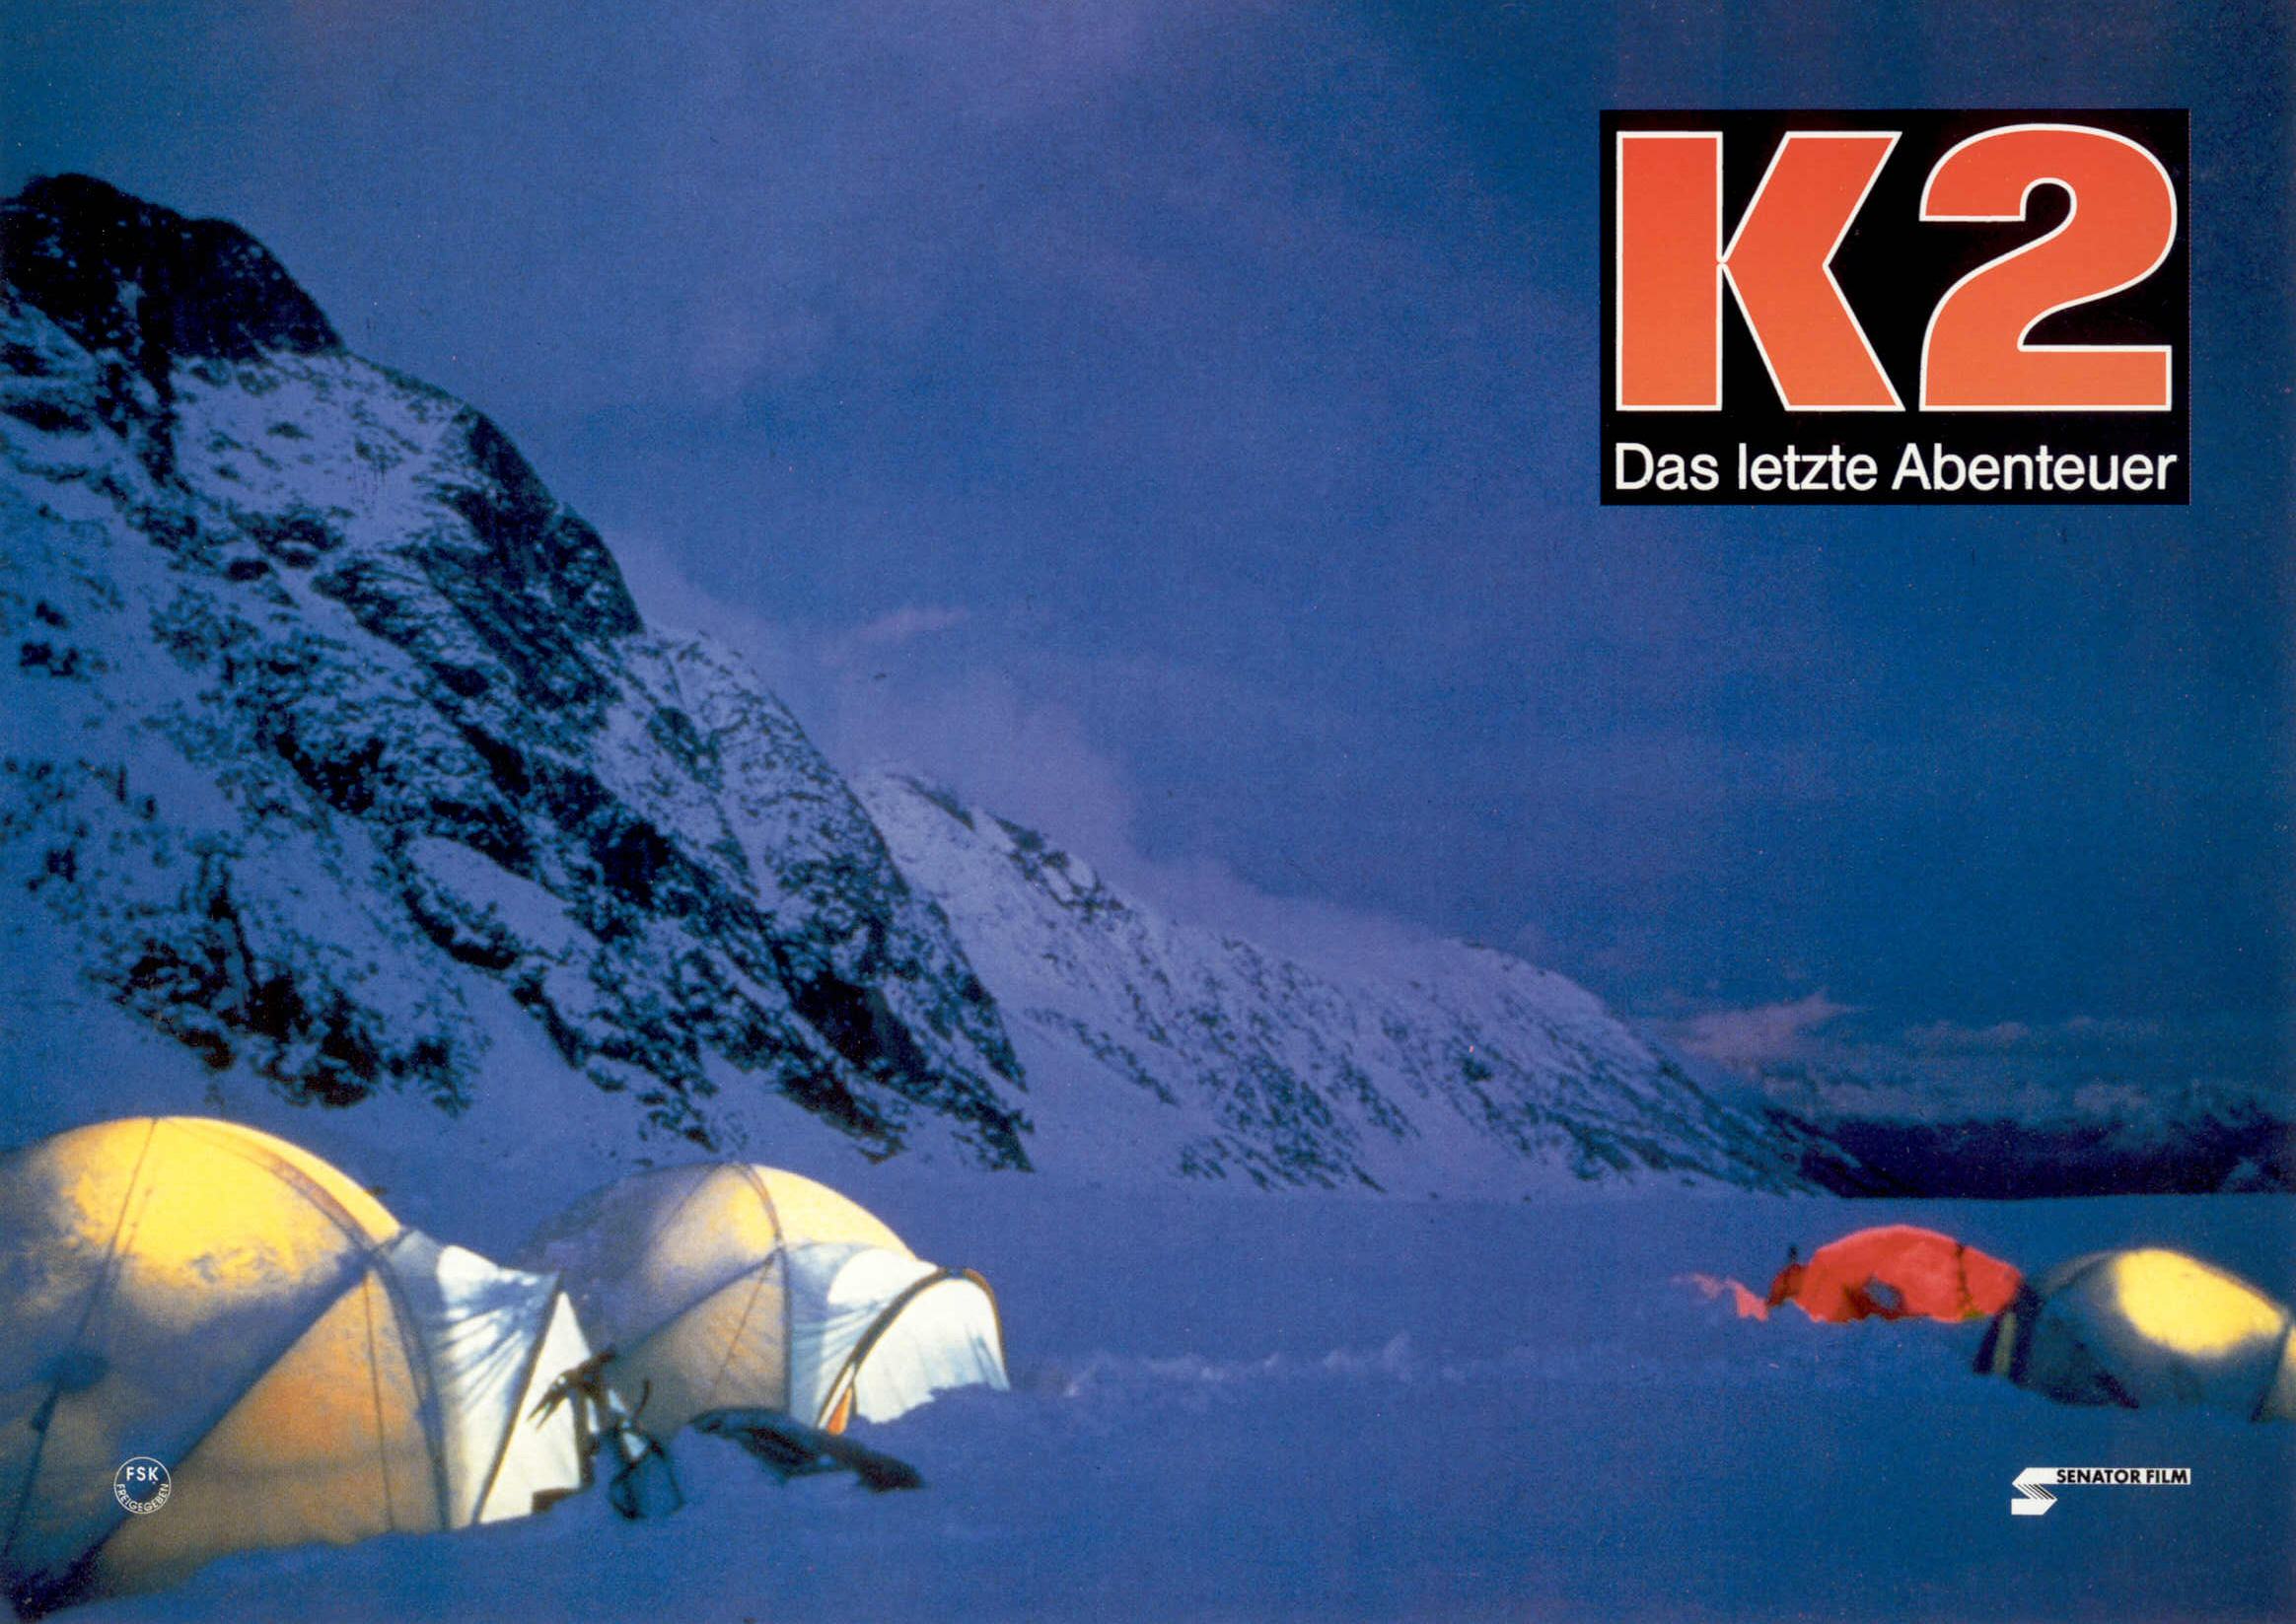 K2 - The Ultimate High
Keywords: k2_img